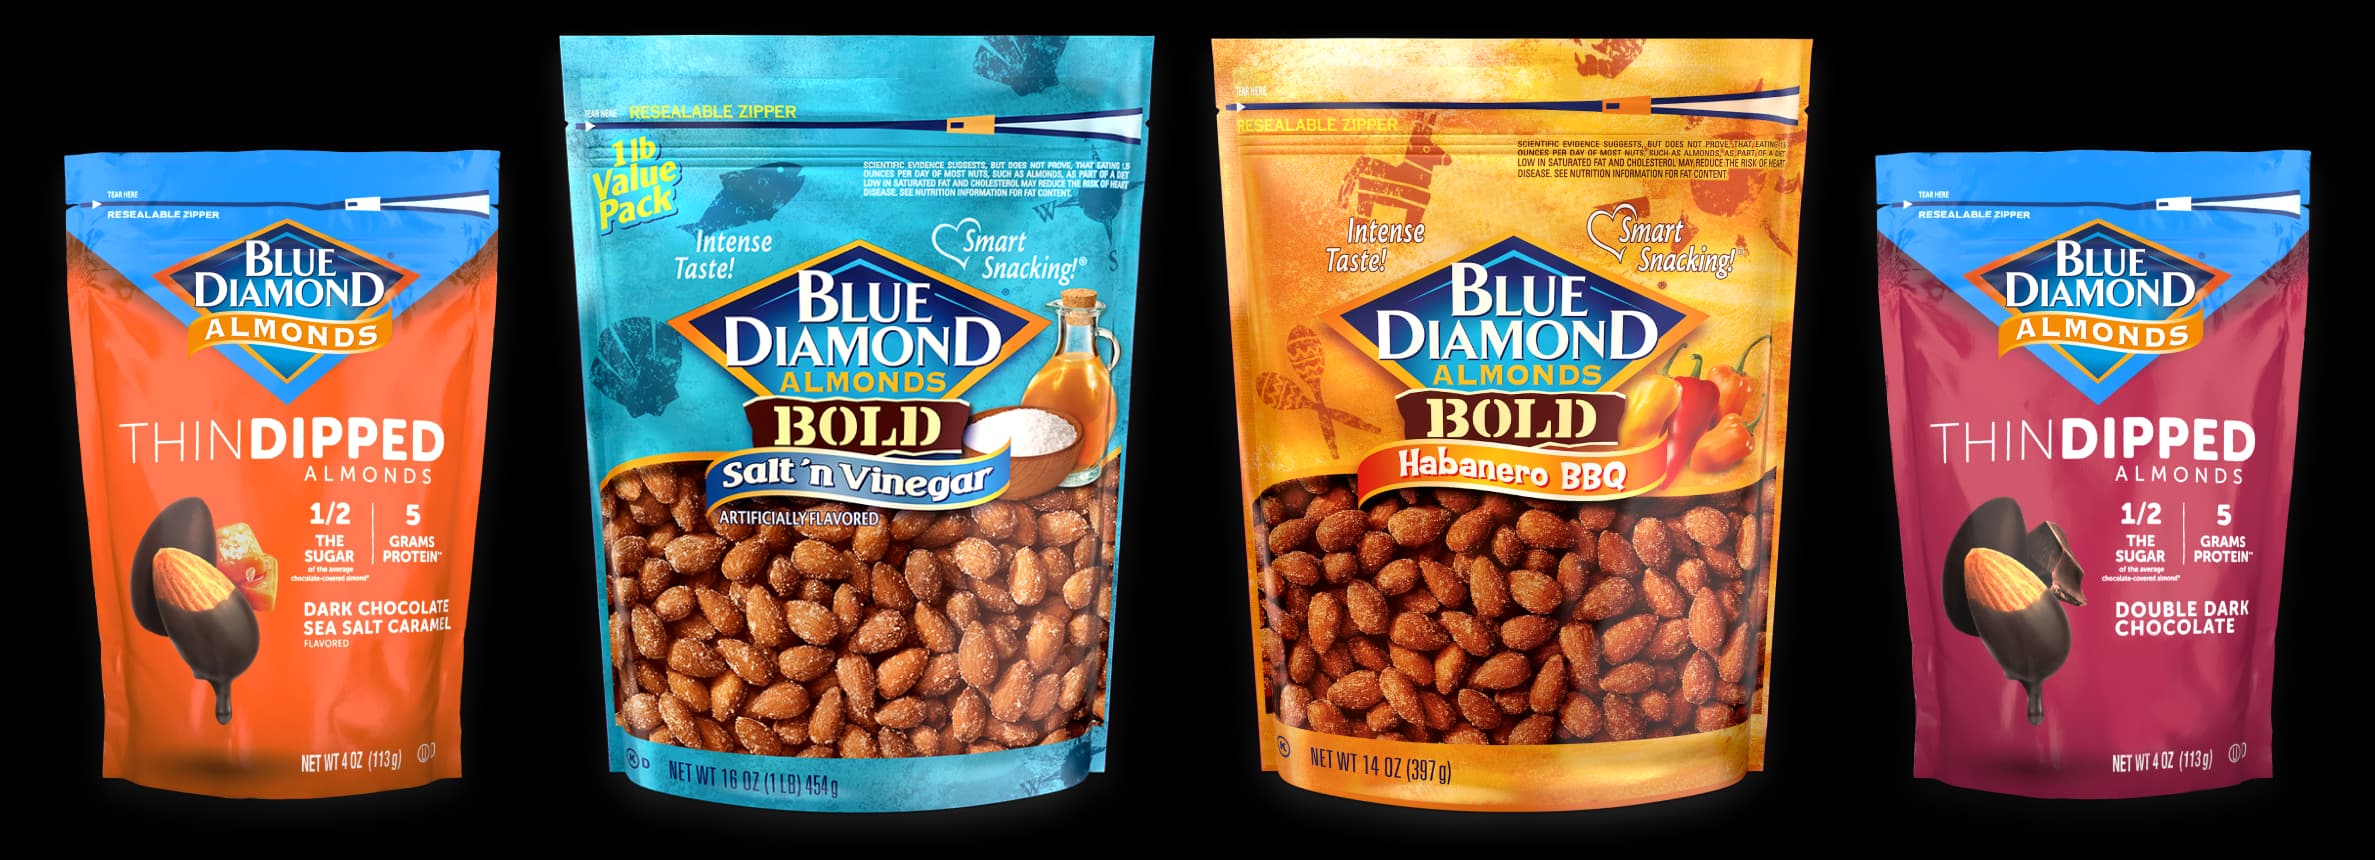 Blue Diamond Snack Almonds